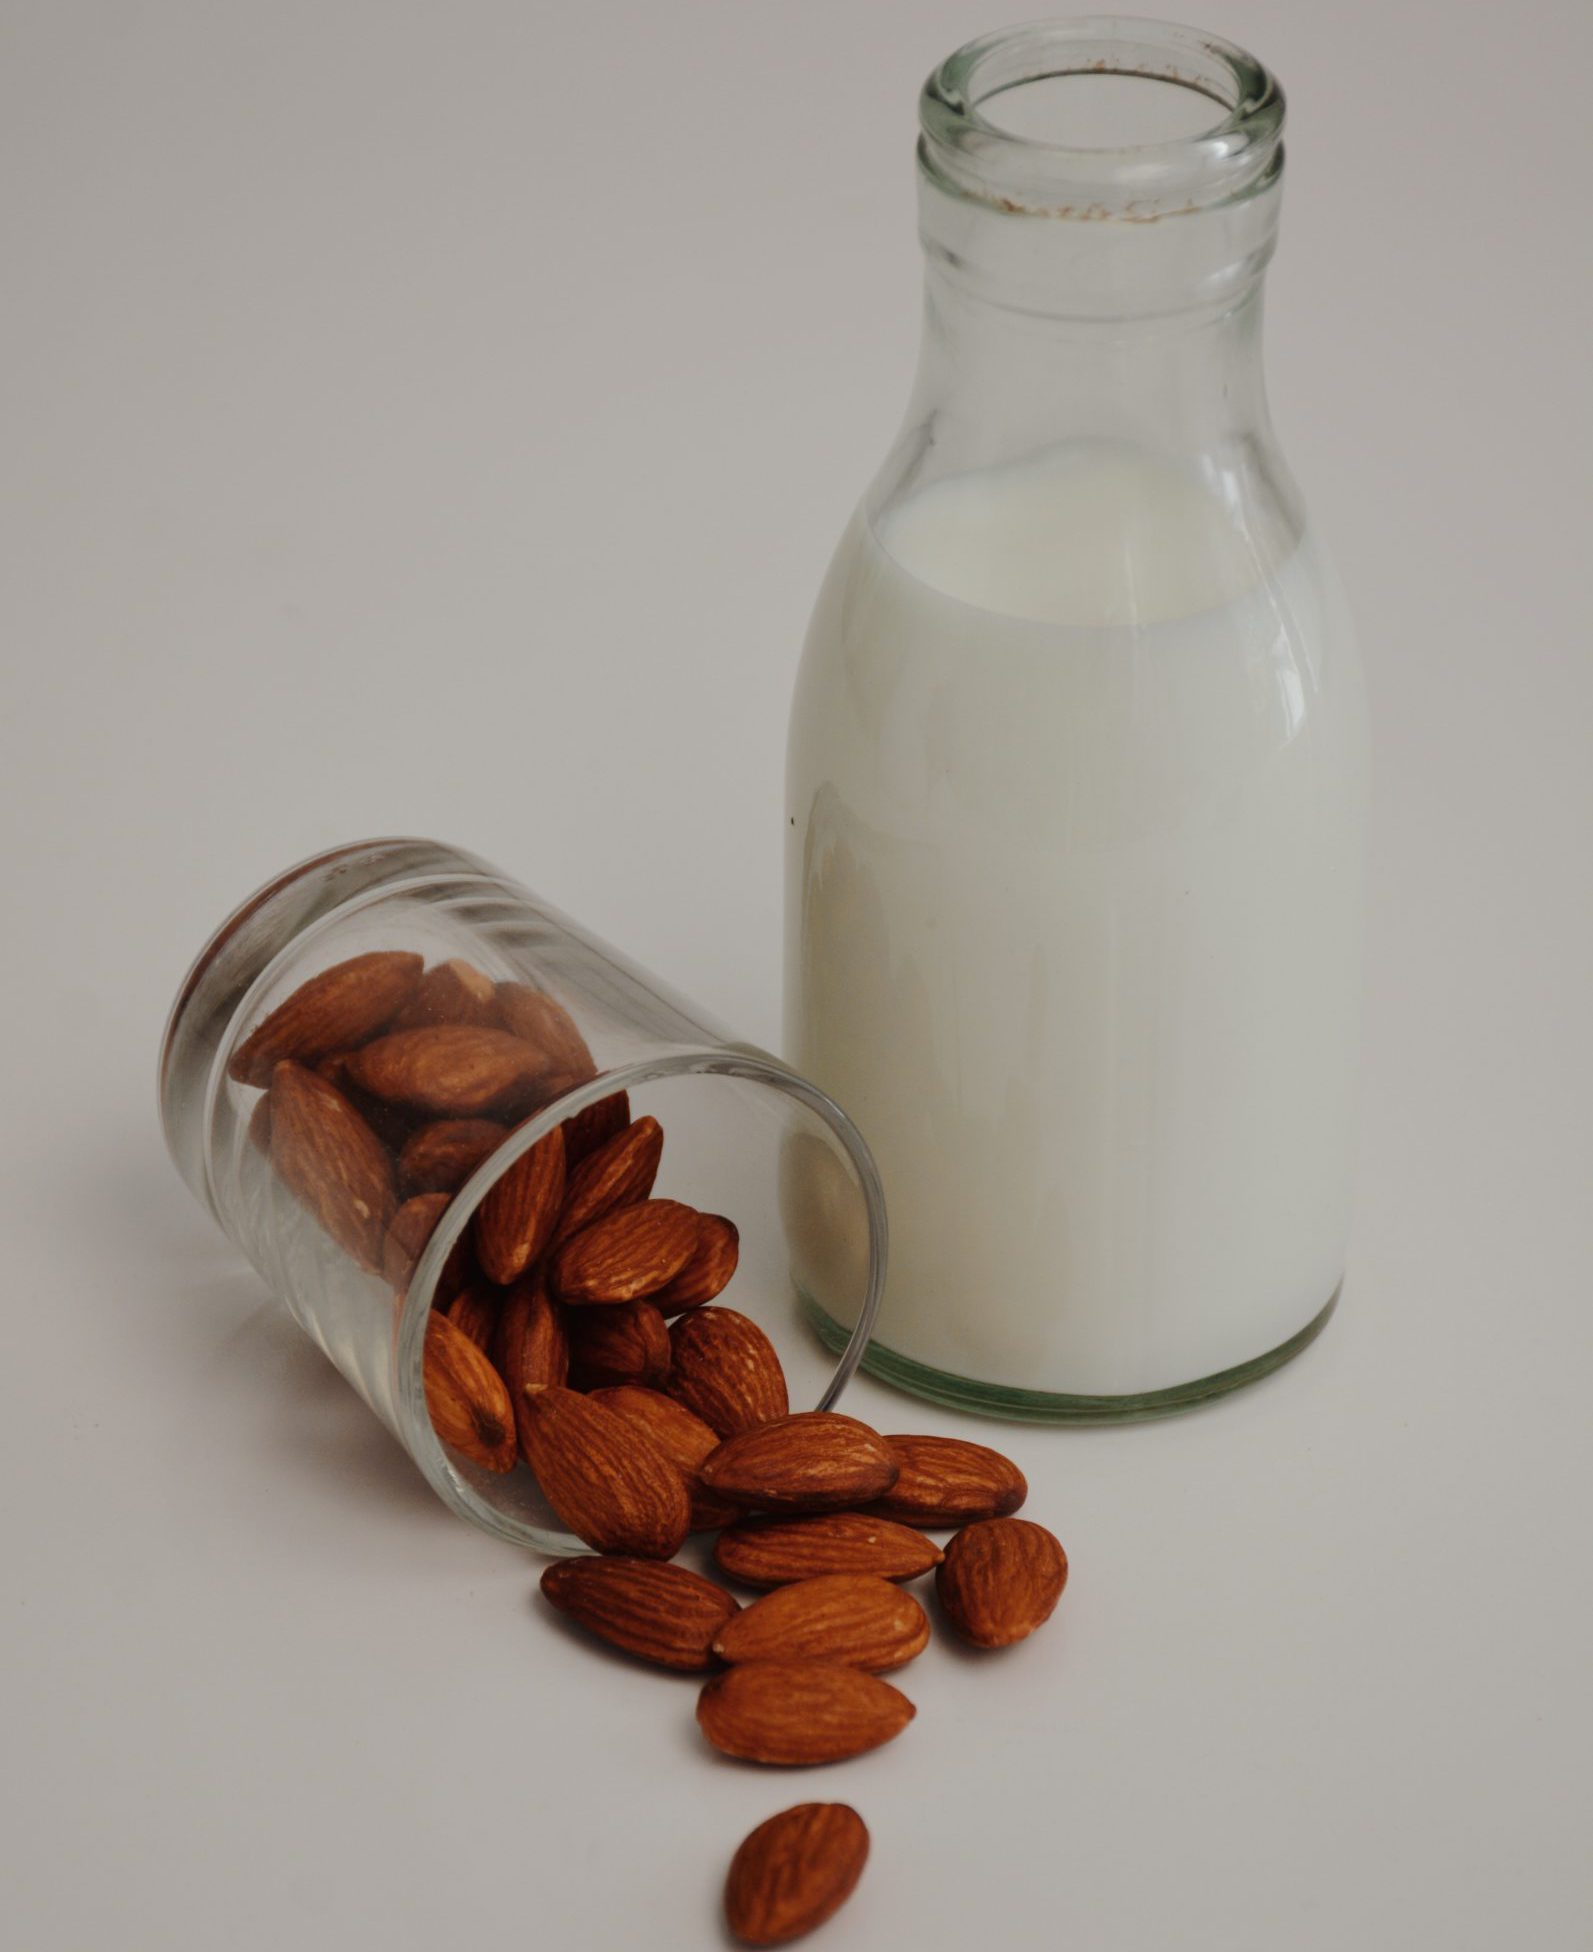 Almonds Recipes, Health Benefits of Almonds